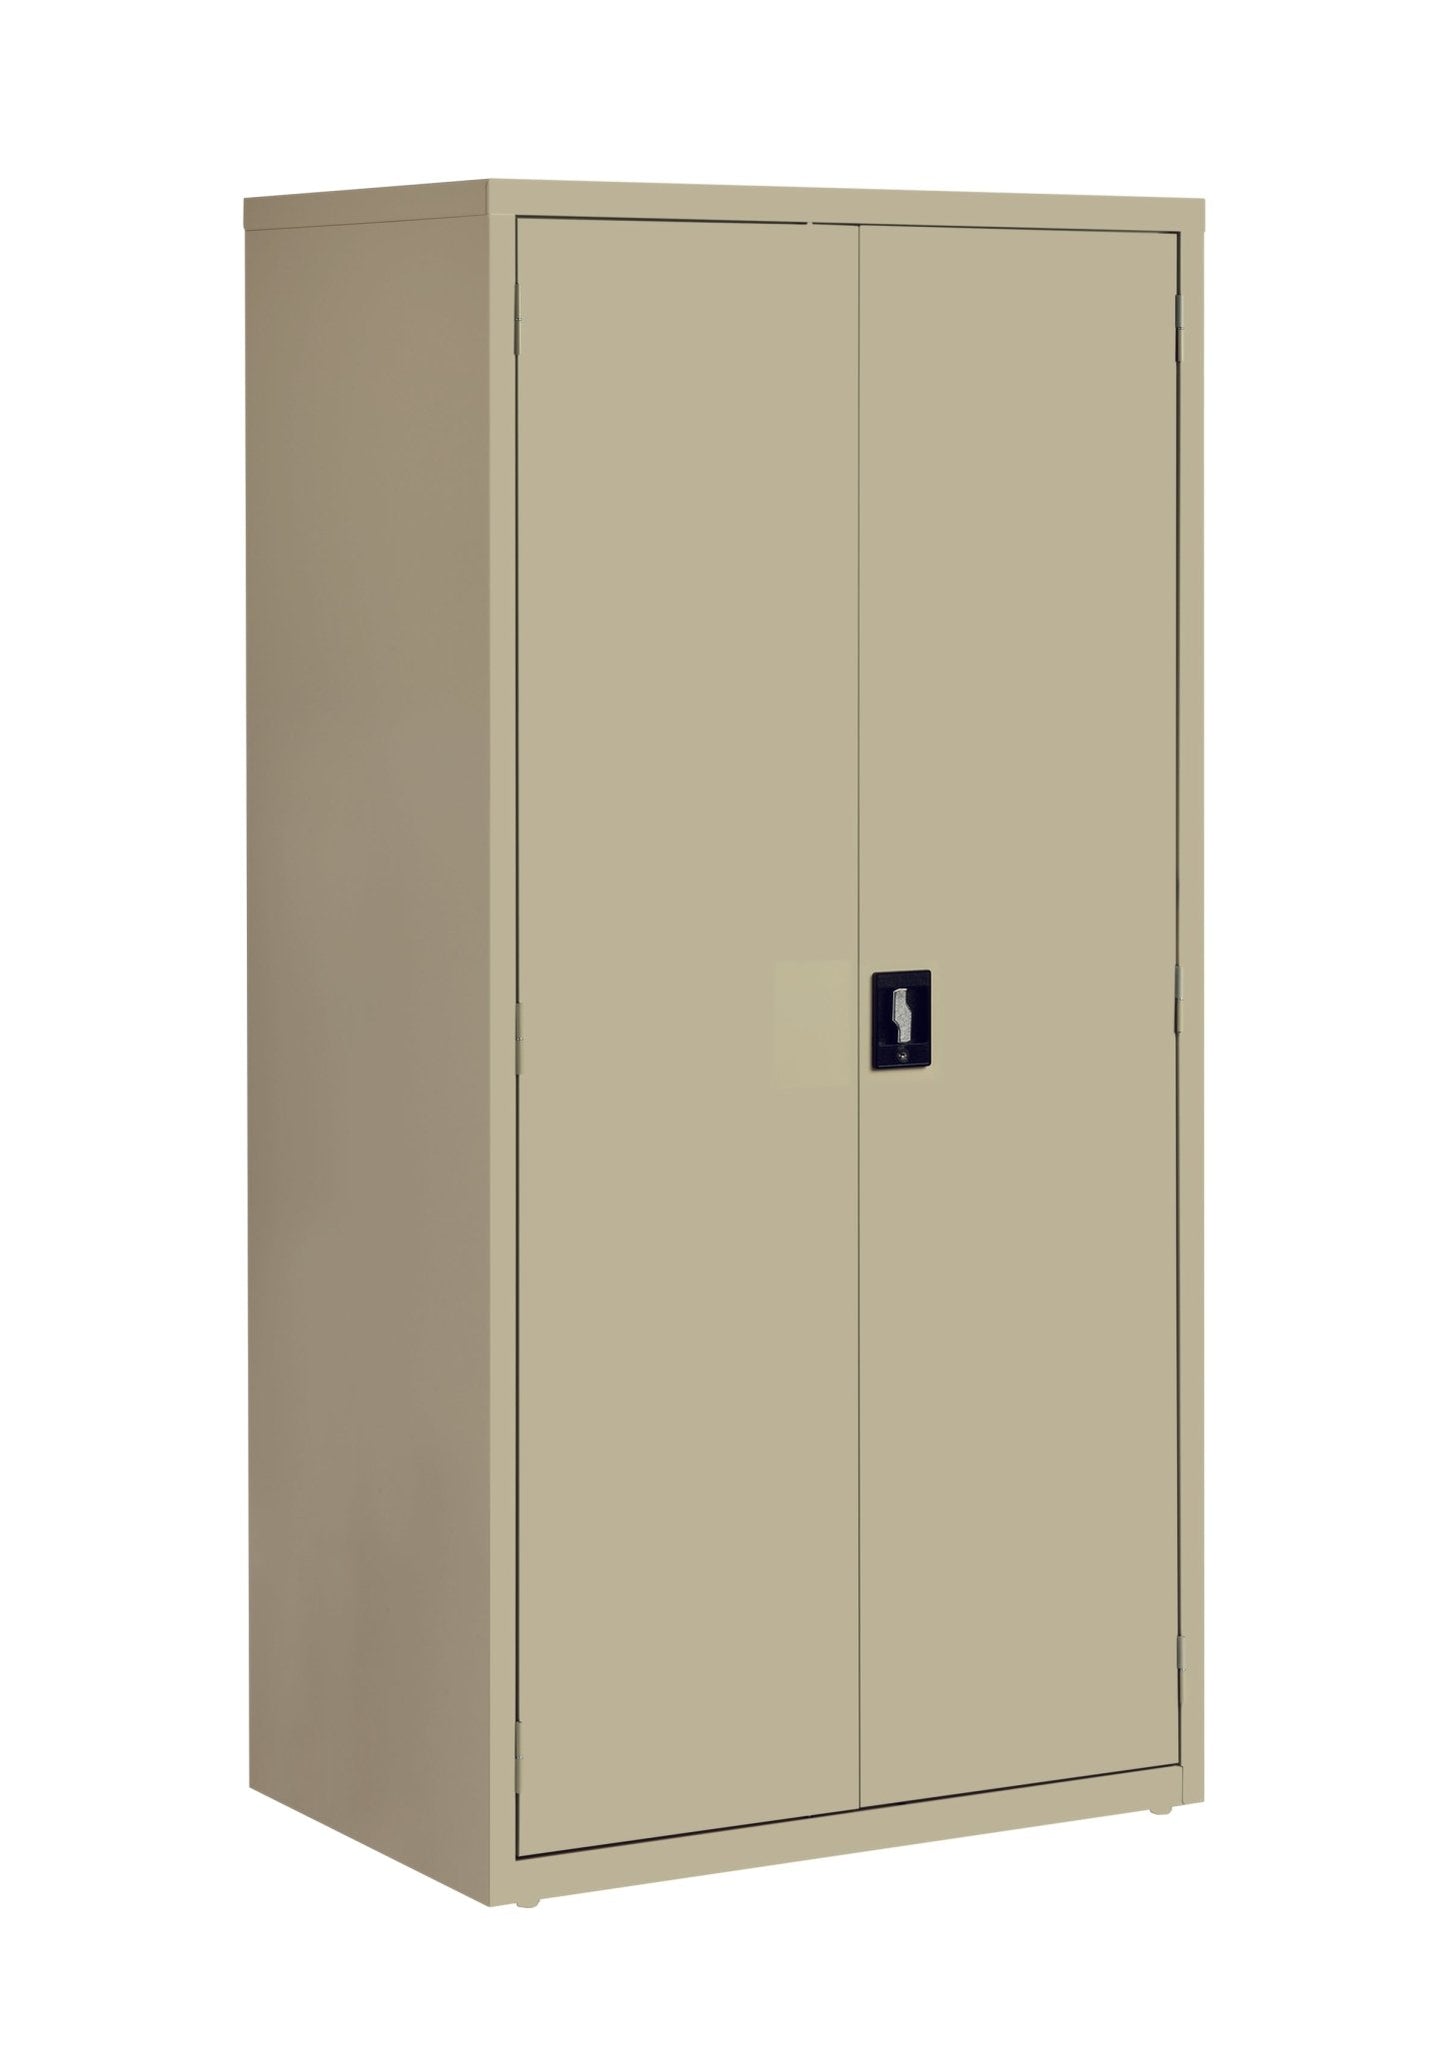 Hirsh Welded Steel Storage Cabinet with 2 Adjustable Shelves, 24"D x 36"W x 72"H - SchoolOutlet